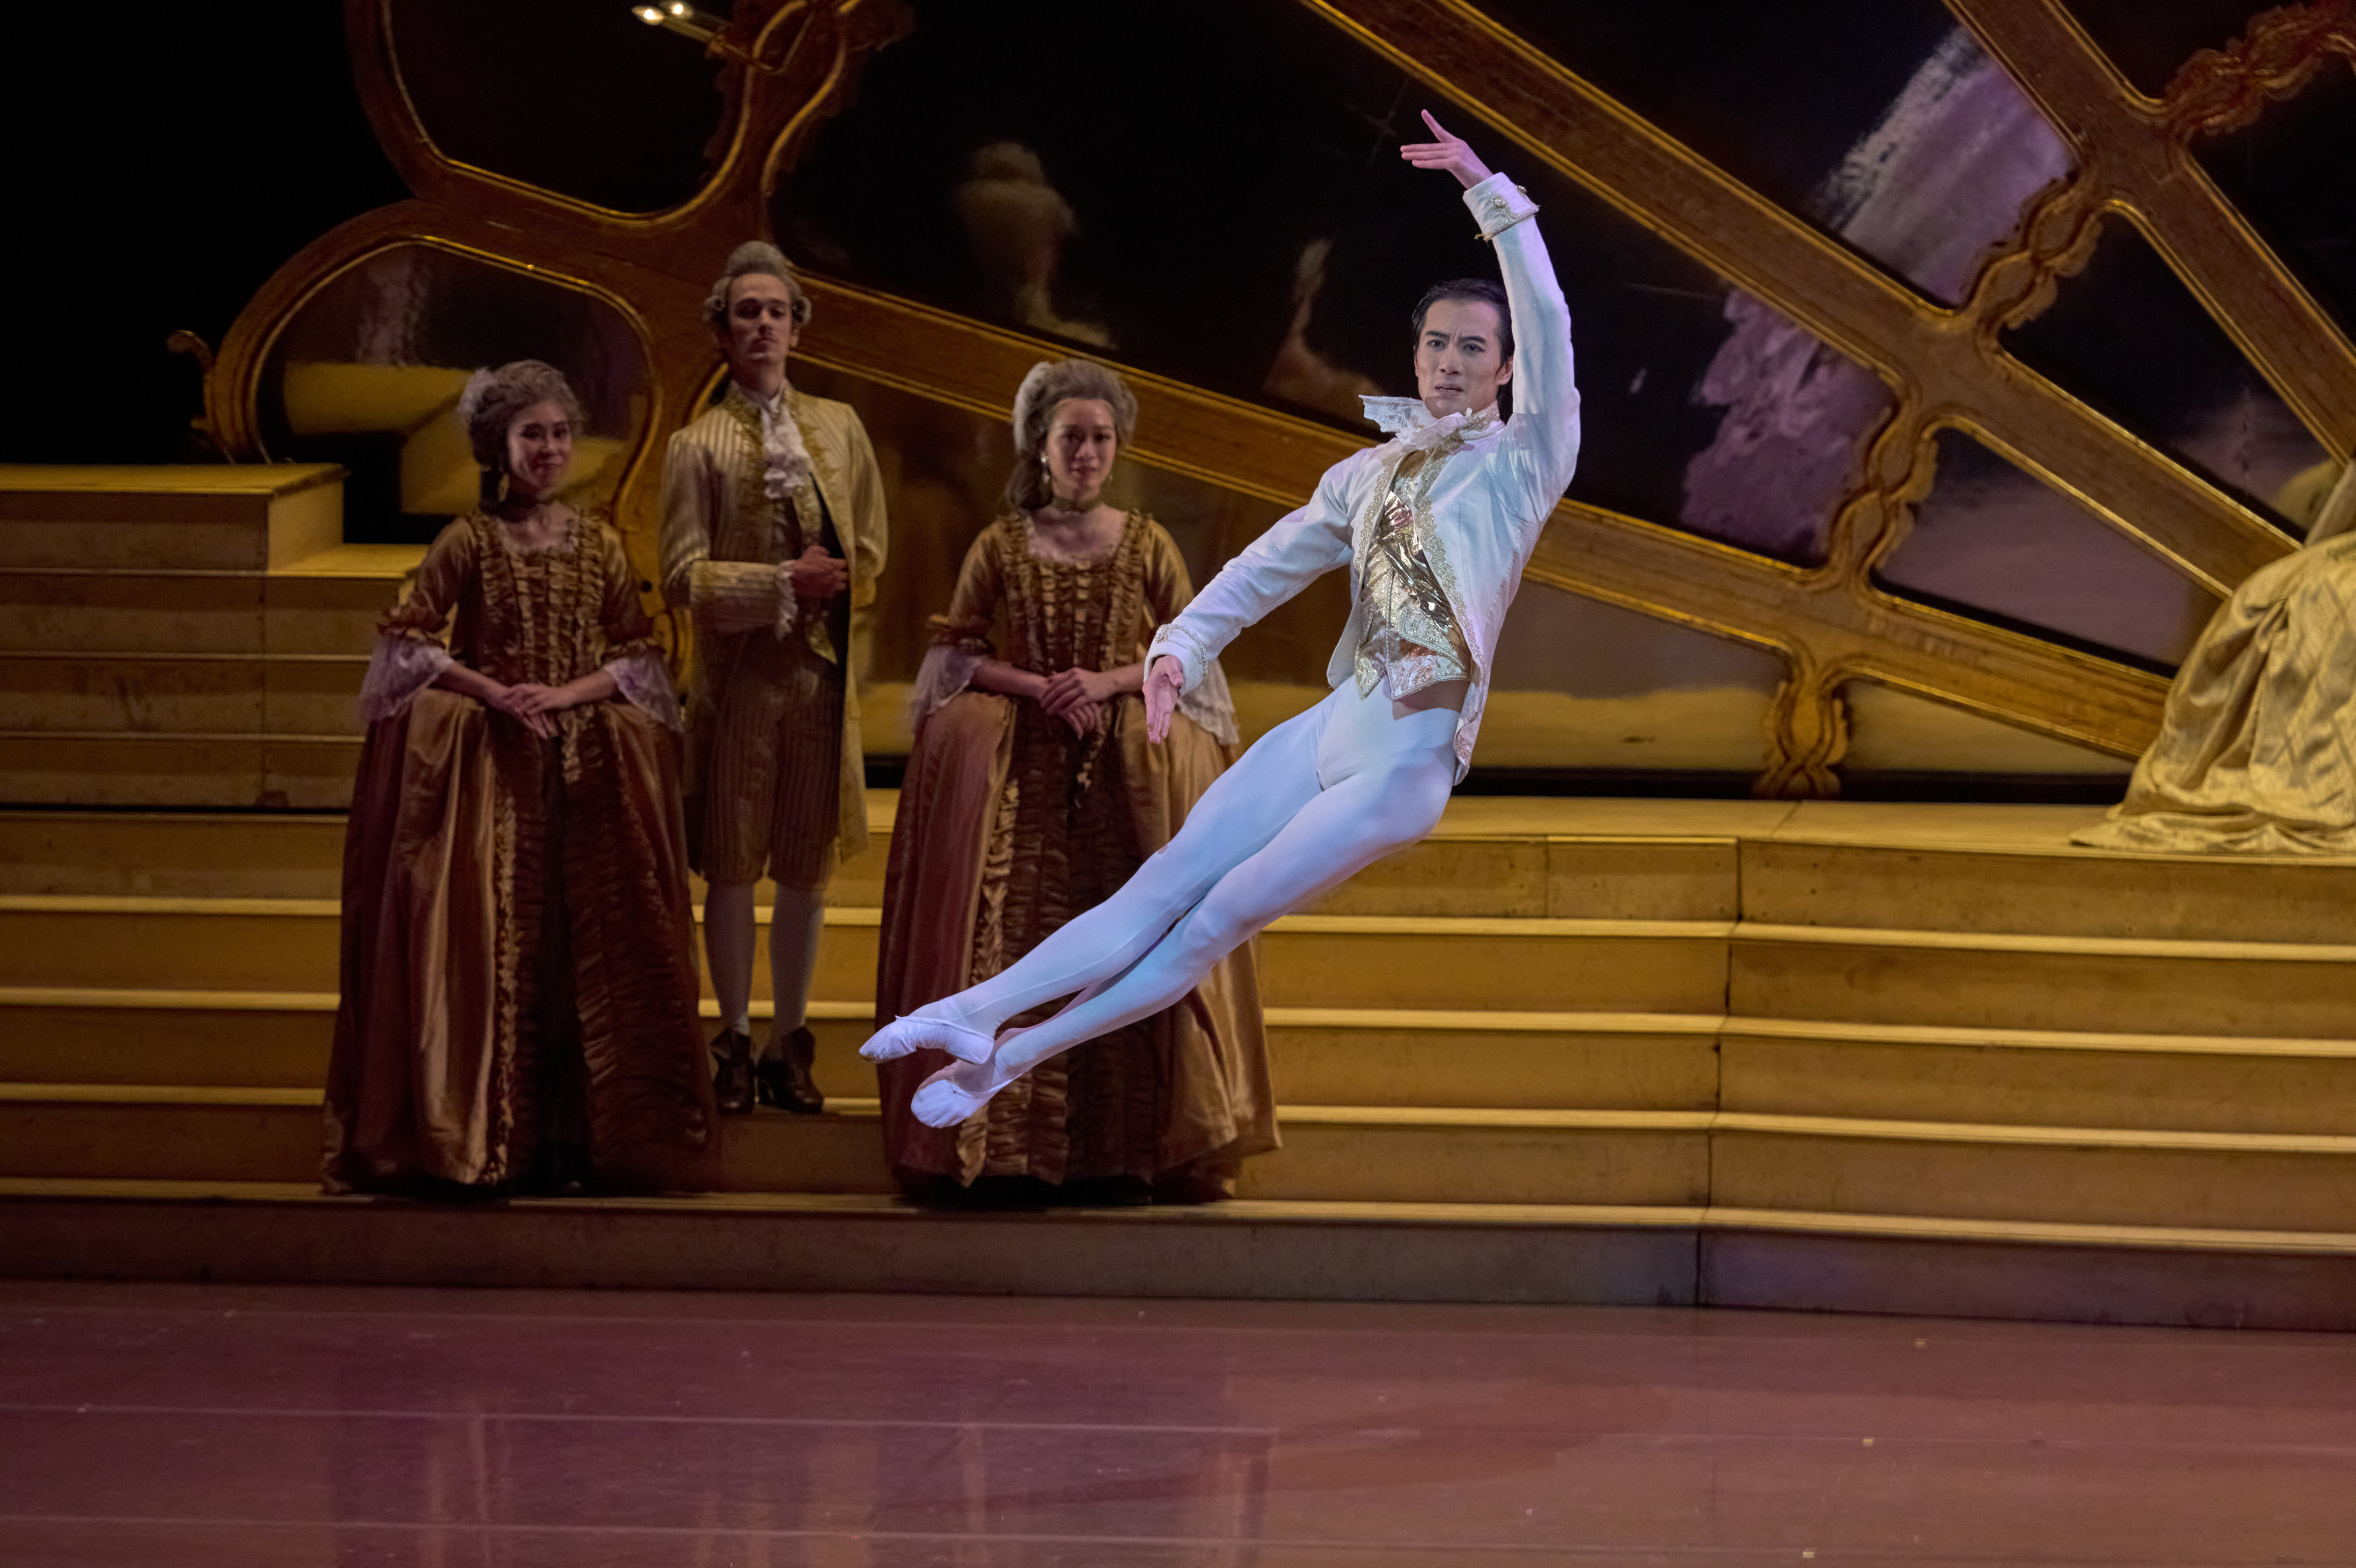 Wei Wei as Prince Désiré in the Oct 17 evening performance of “The Sleeping Beauty”. This was his last performance as a principle dance of Hong Kong Ballet&#xA;&#xA;&#xA;CREDIT  Hong Kong Ballet